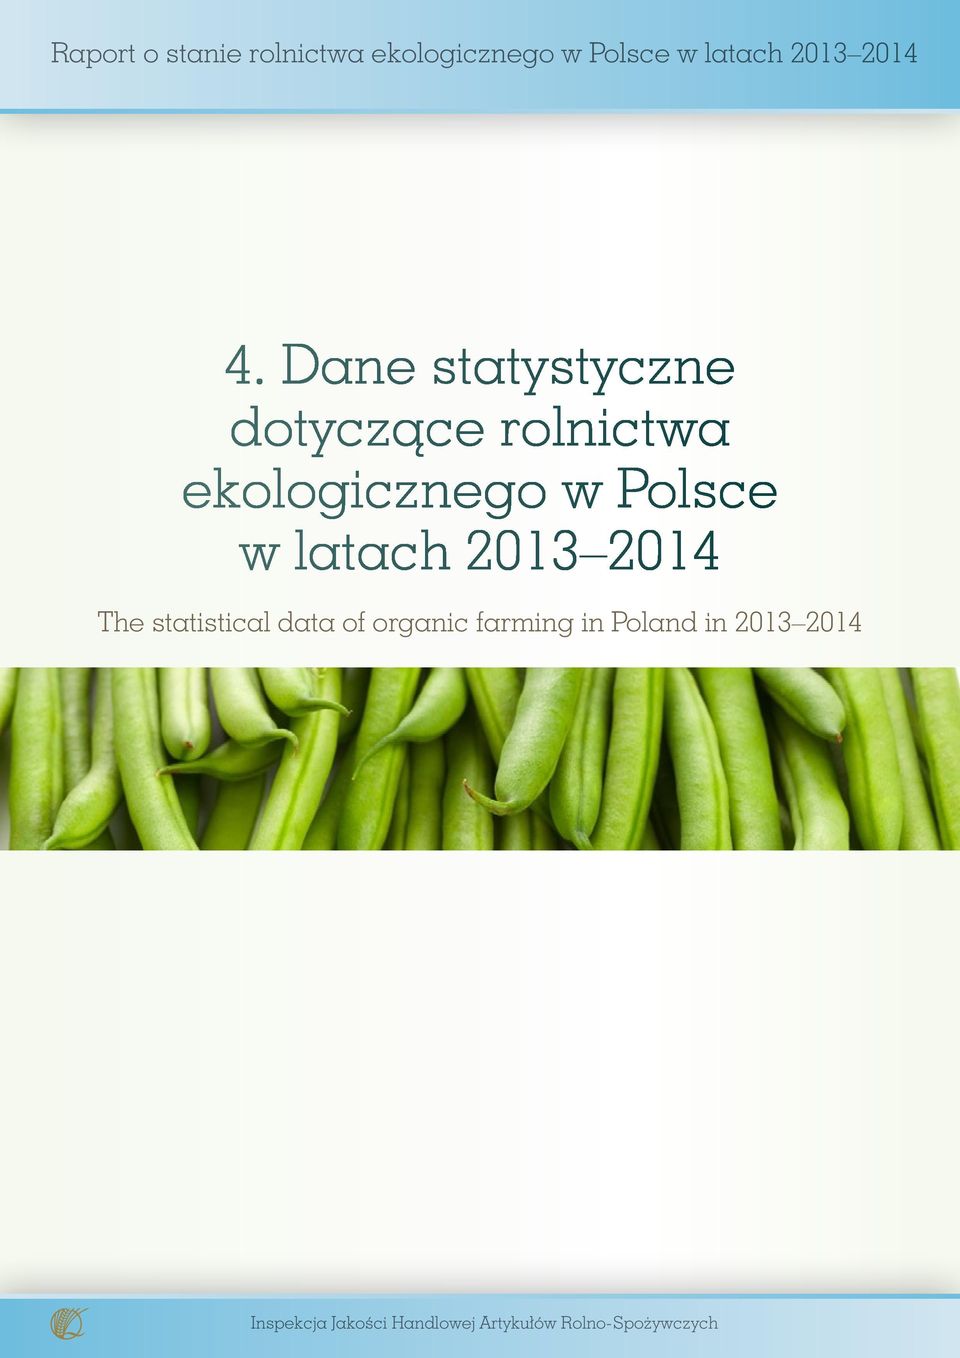 statistical data of organic farming in Poland in